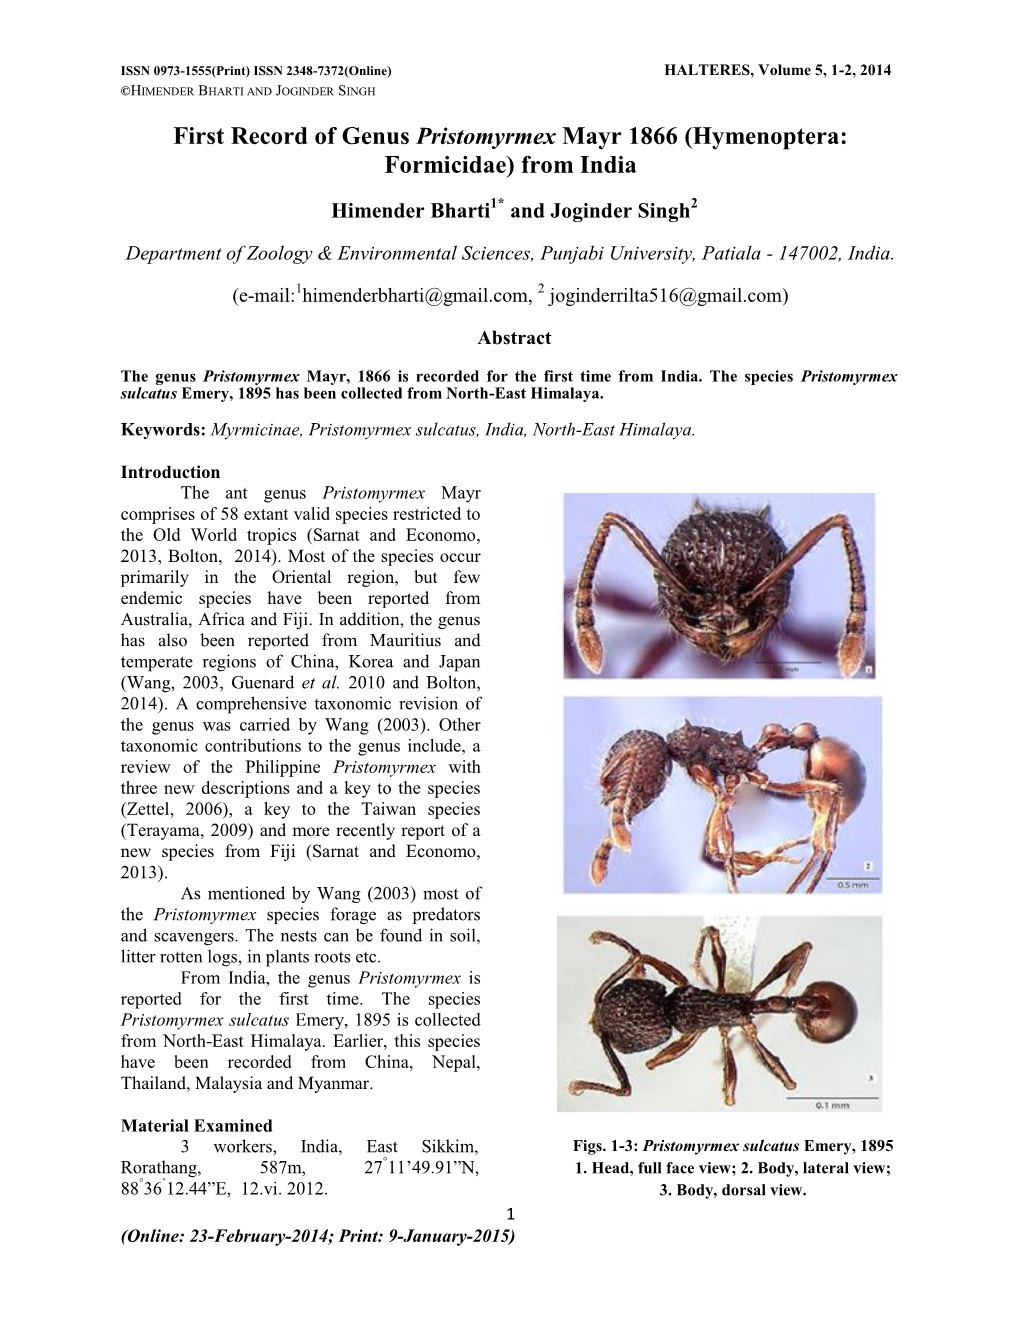 First Record of Genus Pristomyrmex Mayr 1866 (Hymenoptera: Formicidae) from India